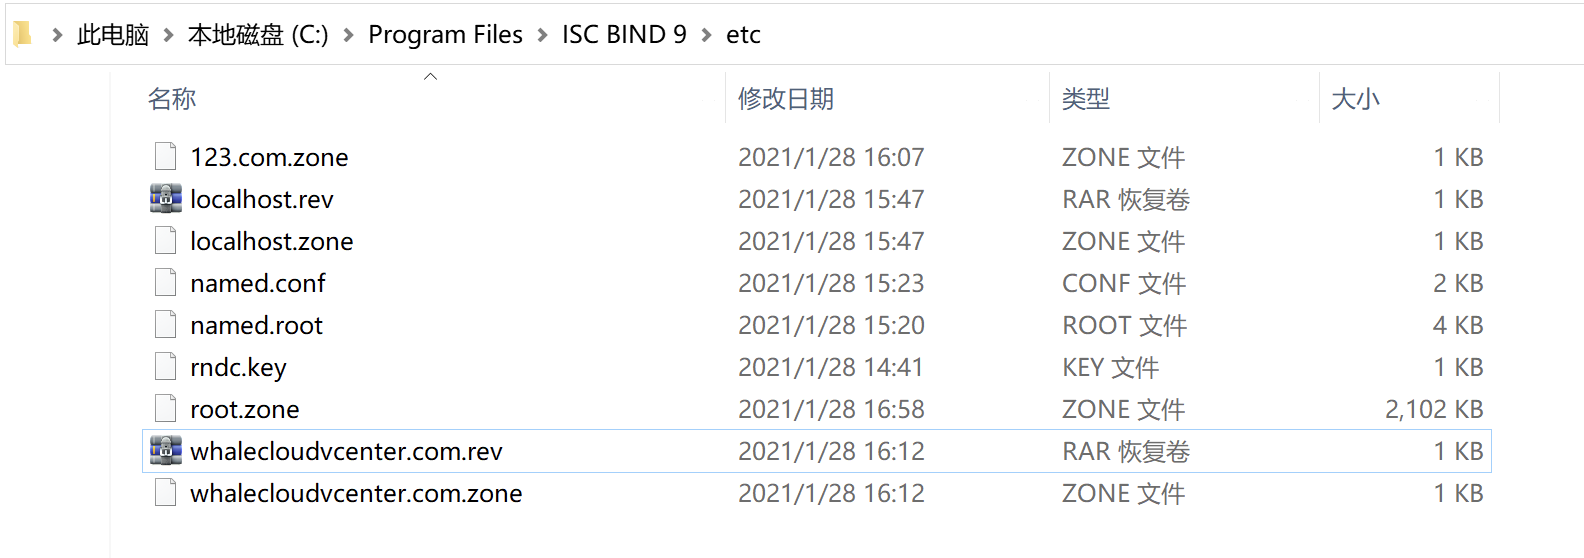 ISC BIND9 - 最详细、最认真的从零开始的BIND 9服务讲解